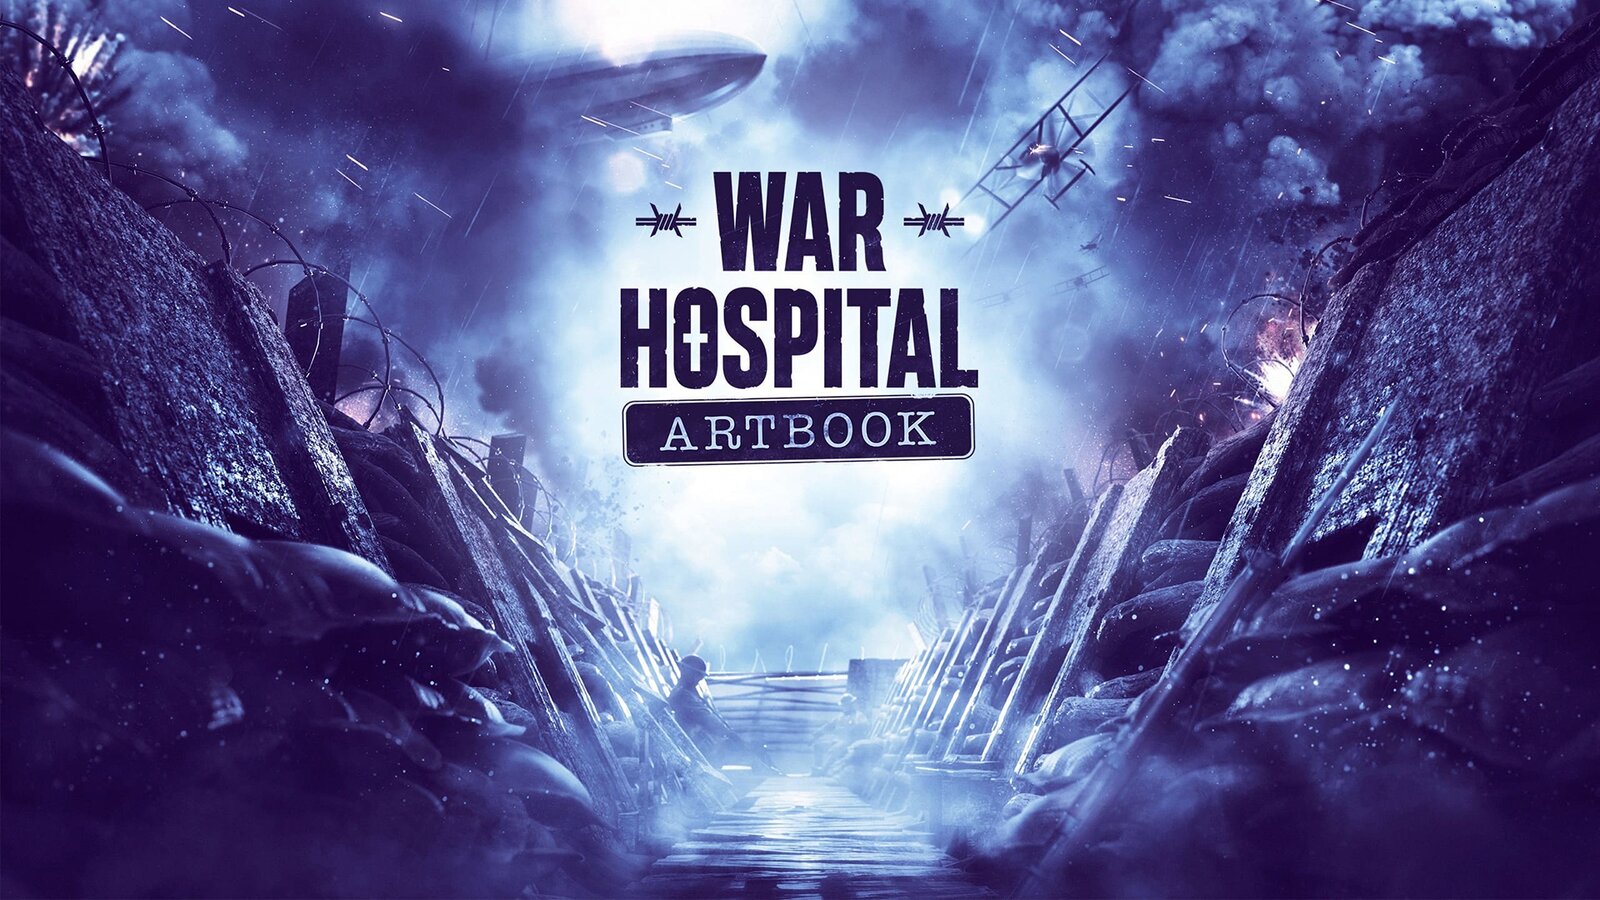 War Hospital - Digital Artbook